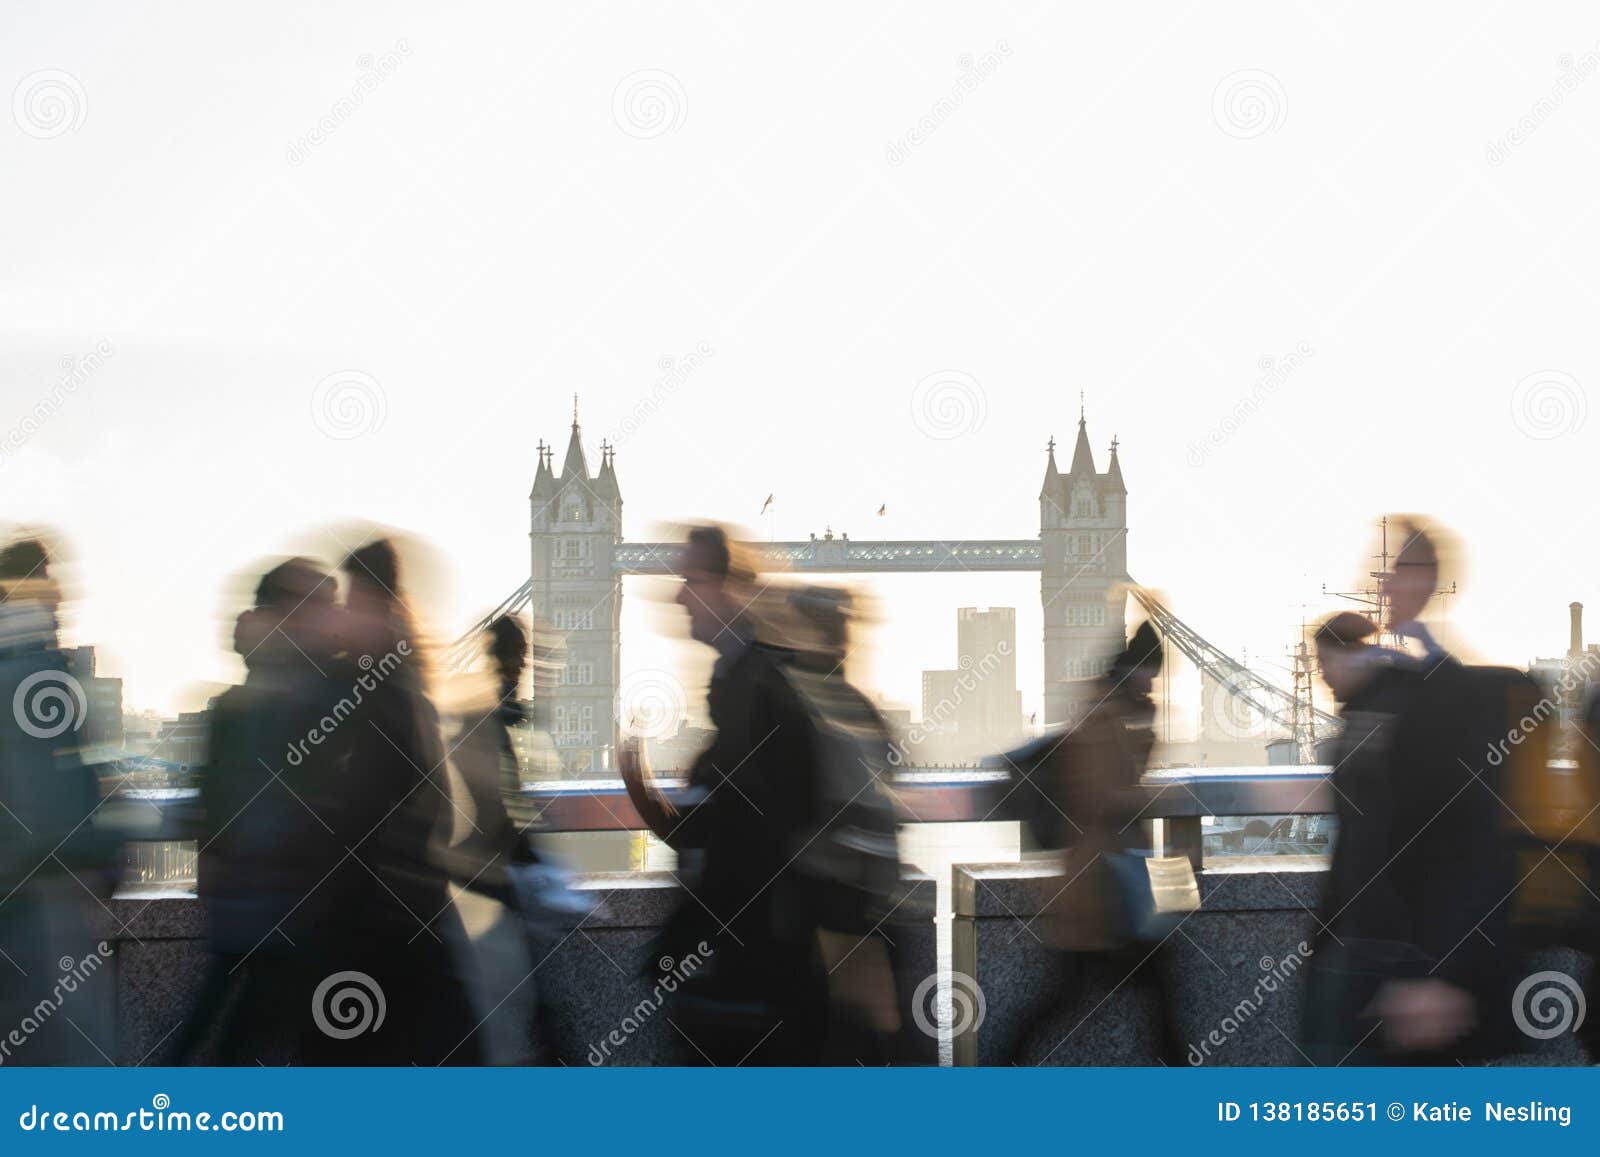 motion blur shot of commuters walking to work across london bridge uk with tower bridge in background